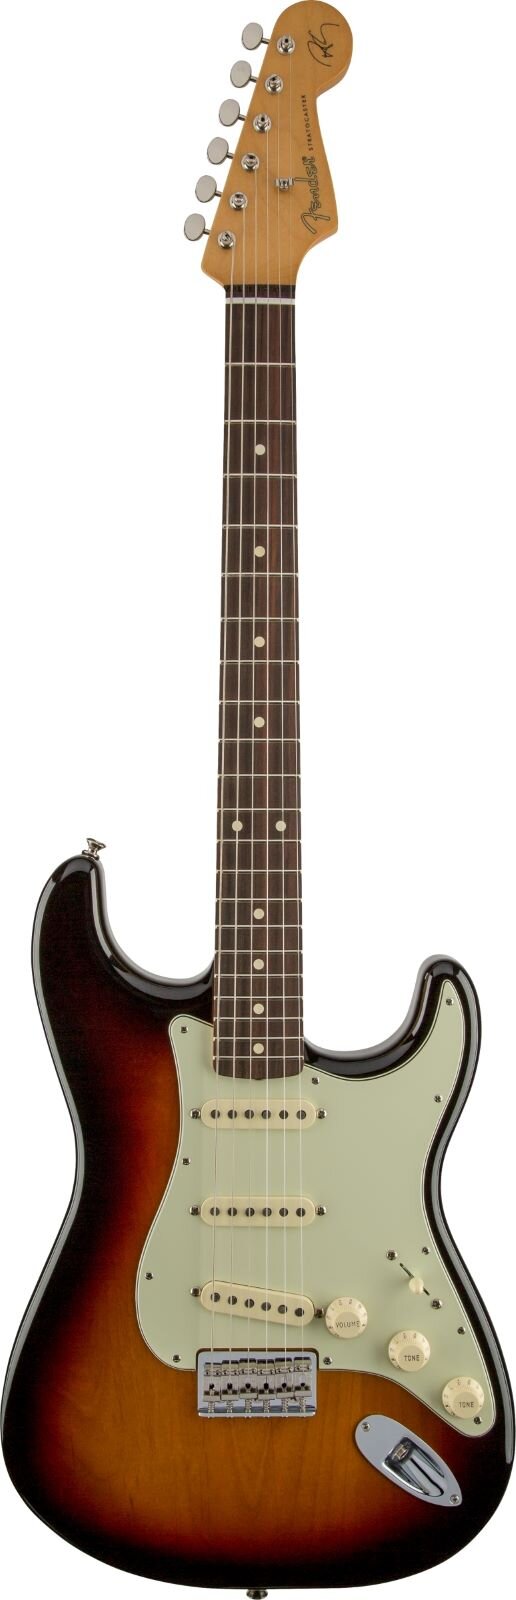 Fender Robert Cray Stratocaster Rosewood Griffbrett 3-Color Sunburst : photo 1